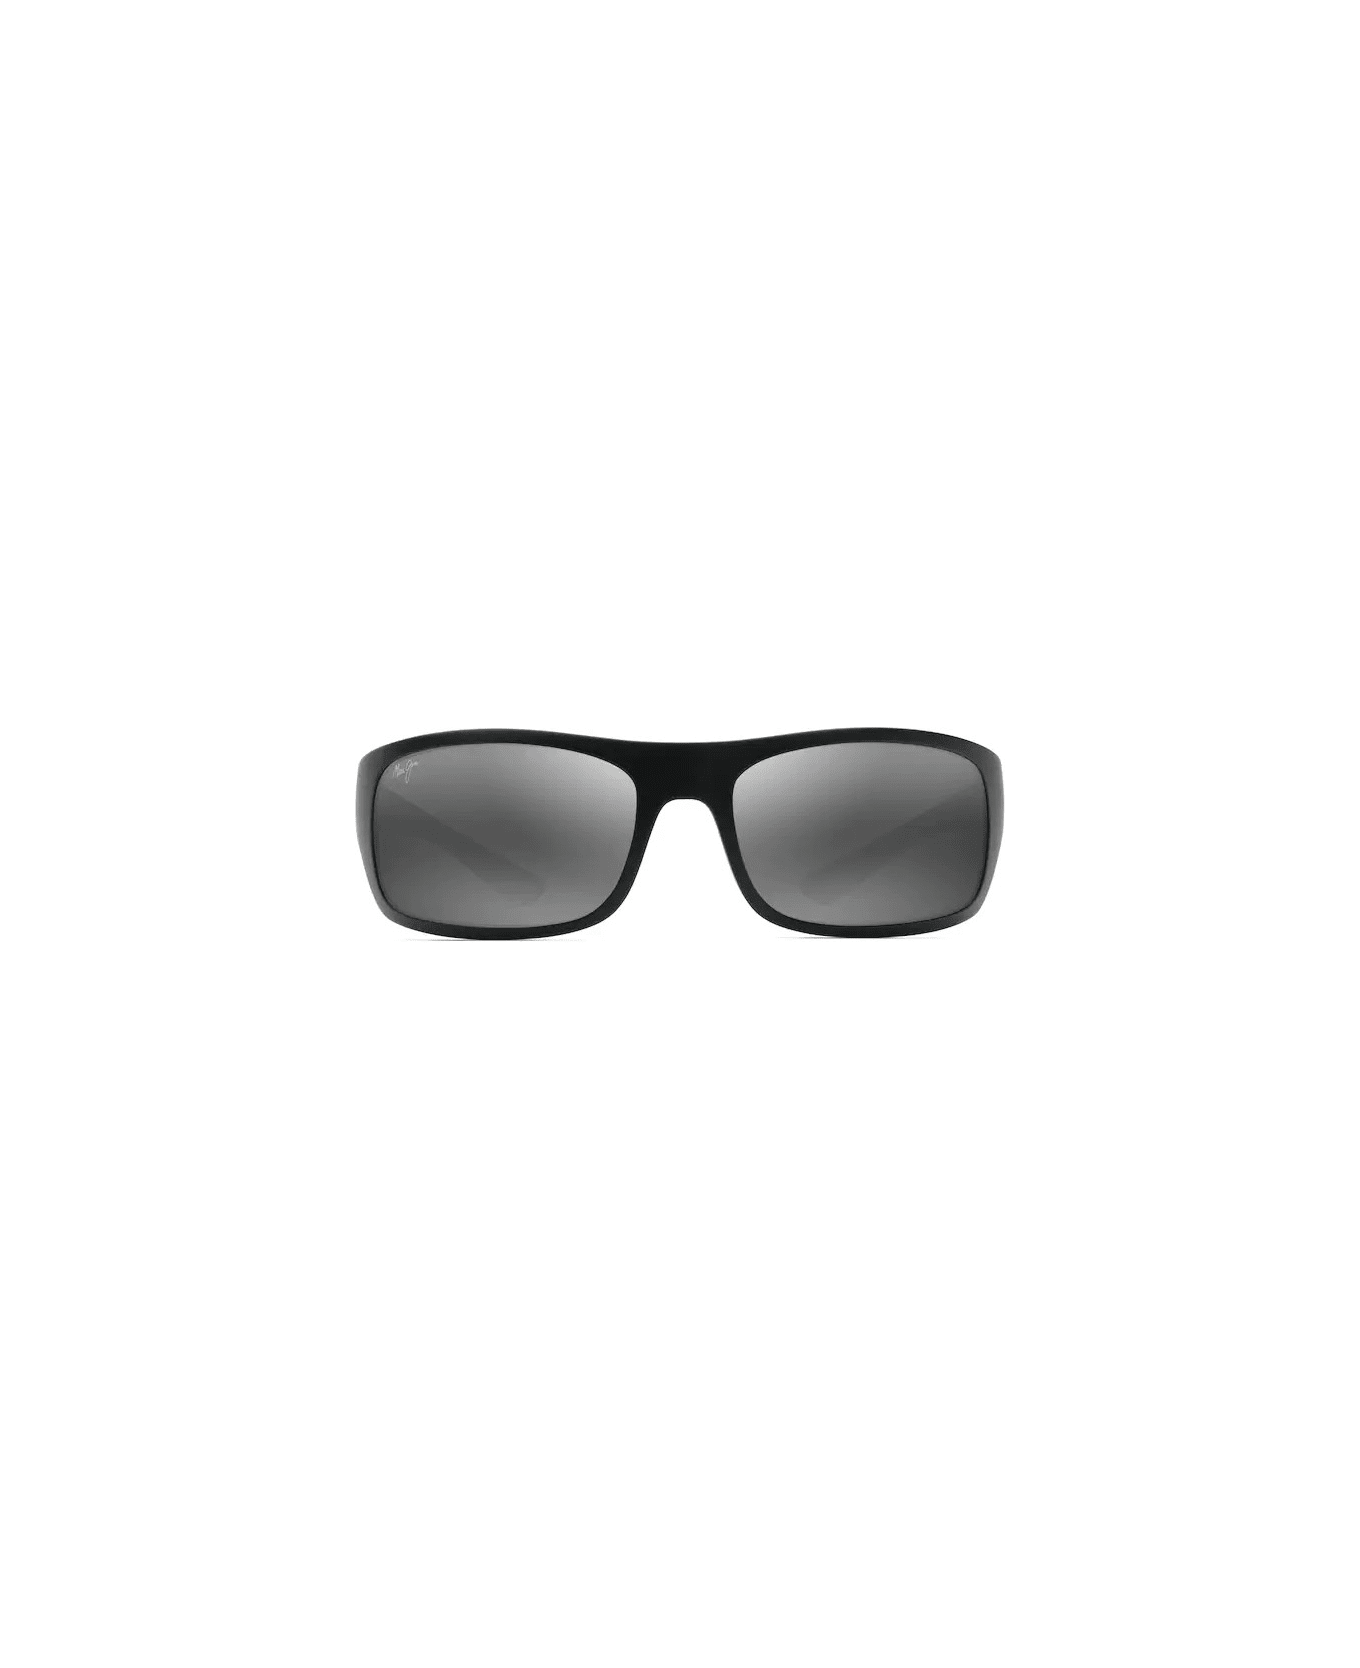 Maui Jim MJ440-2M Sunglasses - Nero lente grigia